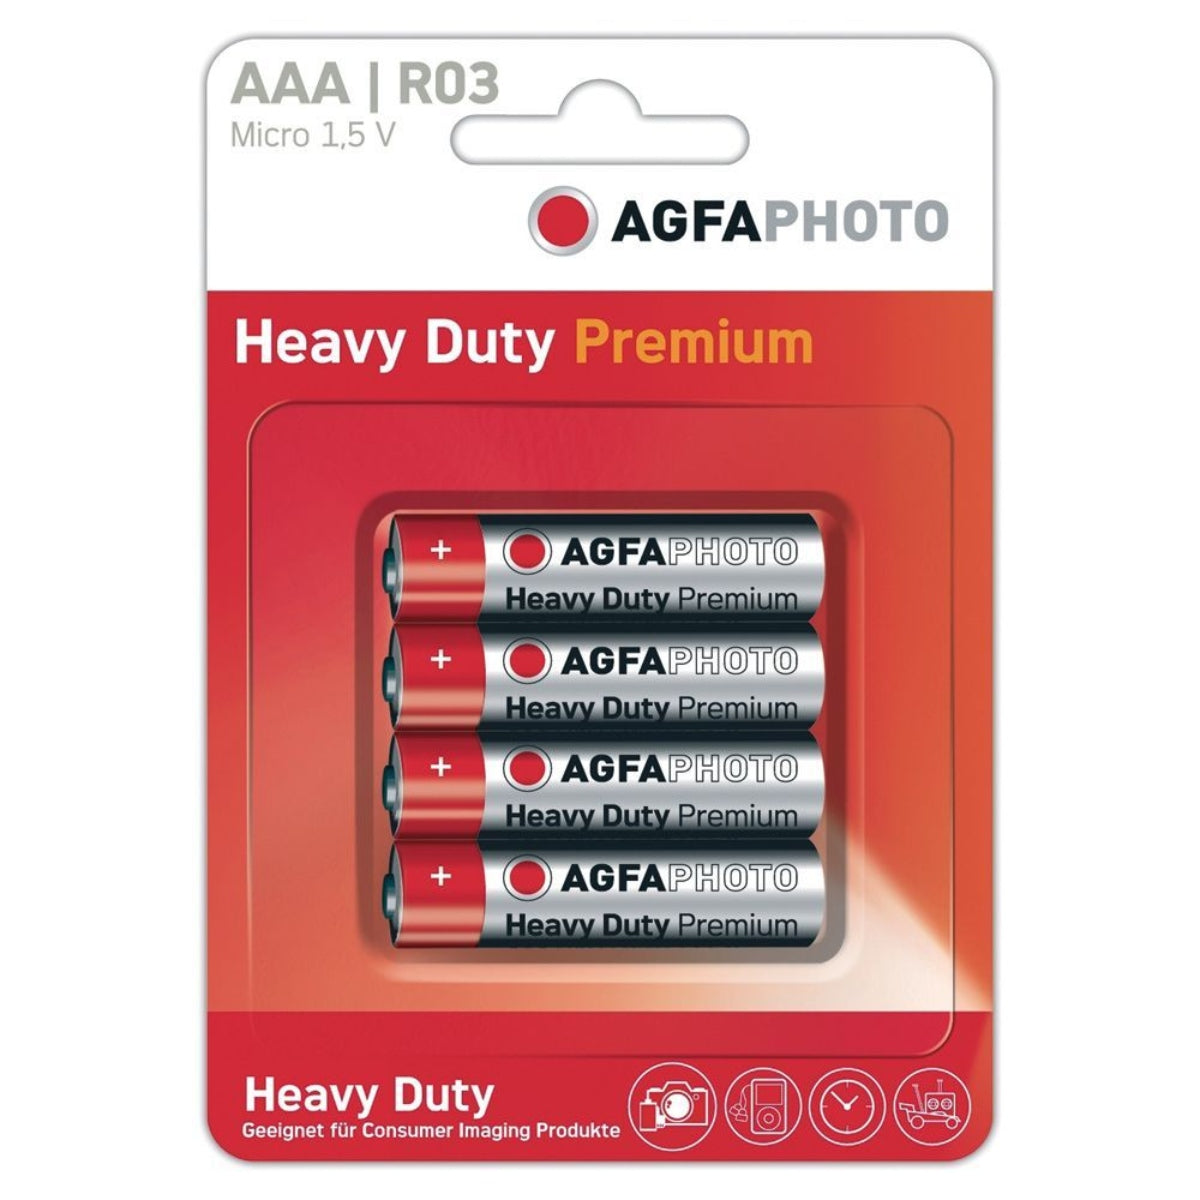 AGFA Photo Heavy Duty Premium AAA Batteries 4 Pack - Simply Pleasure